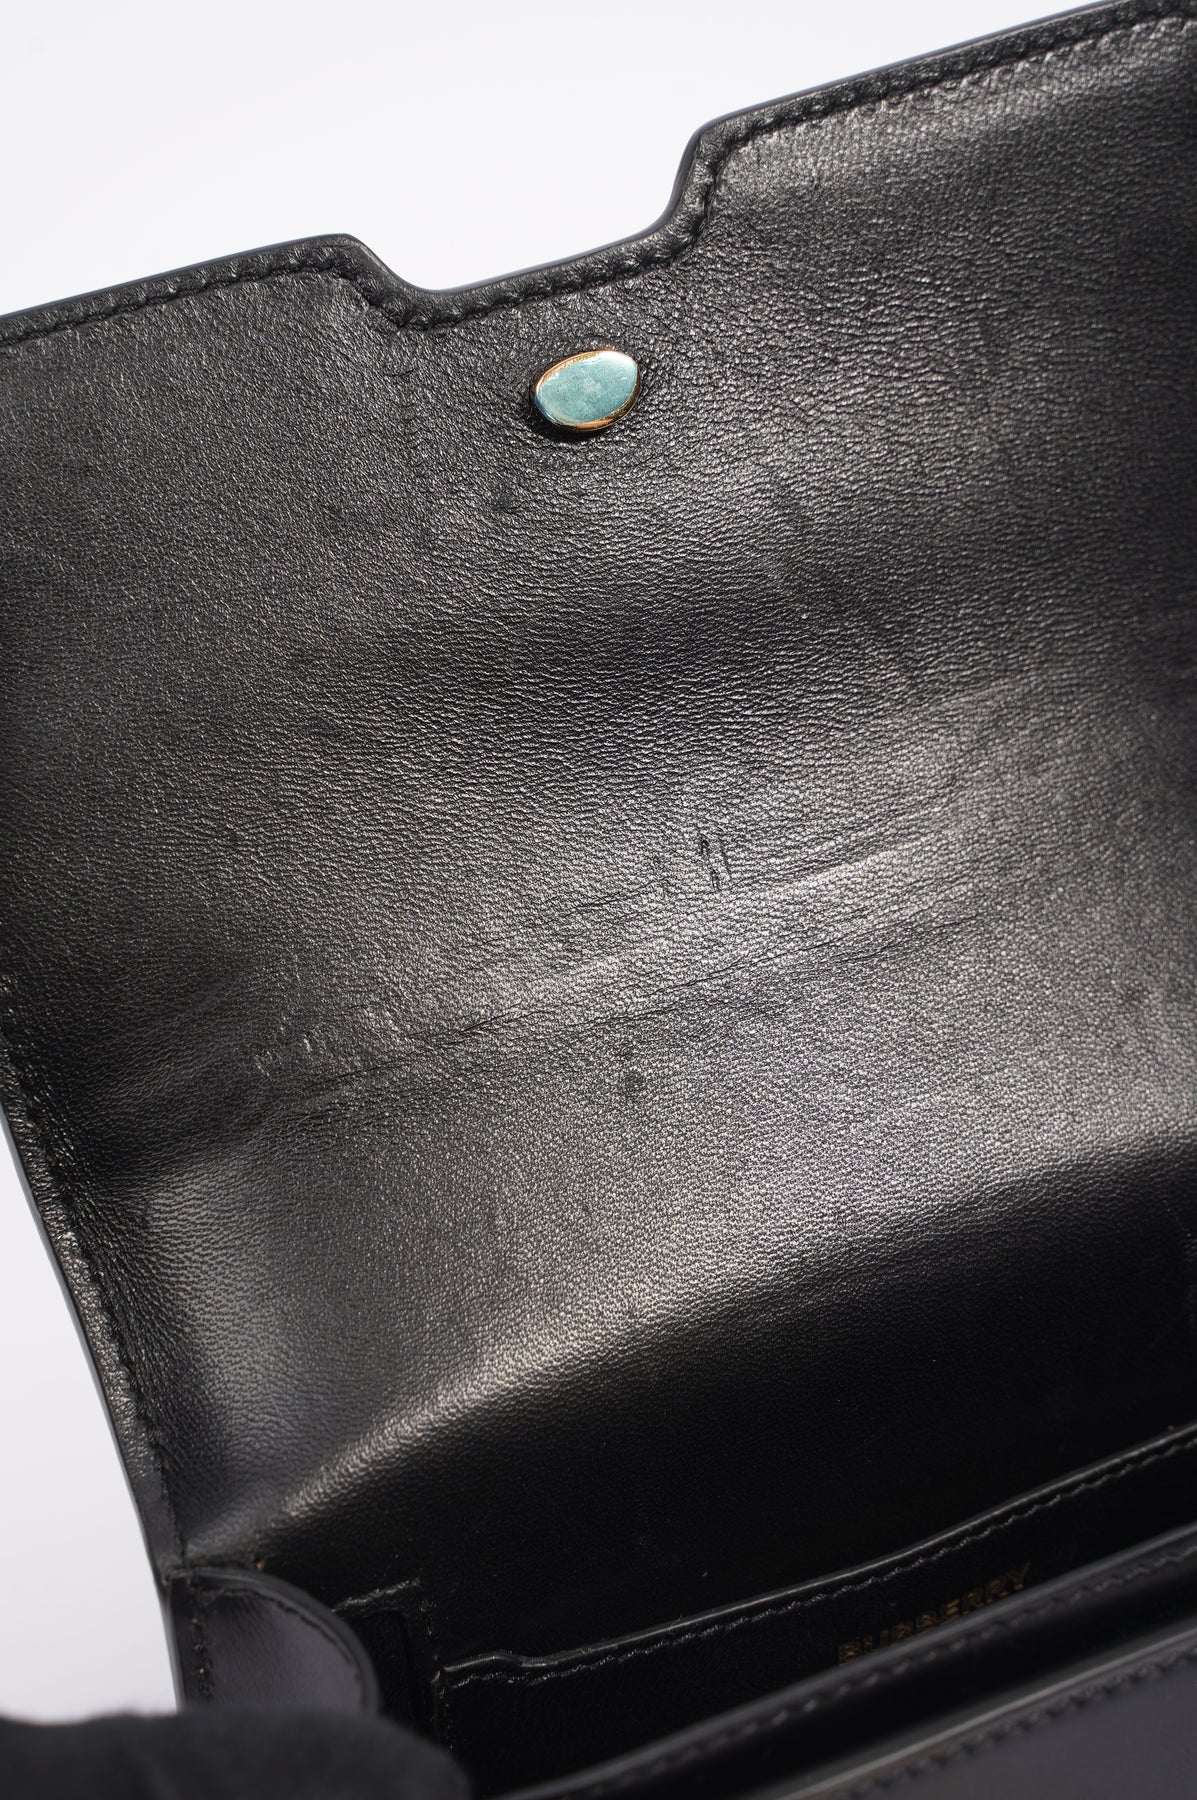 Burberry Tb Chain Detail Belt Bag in Black